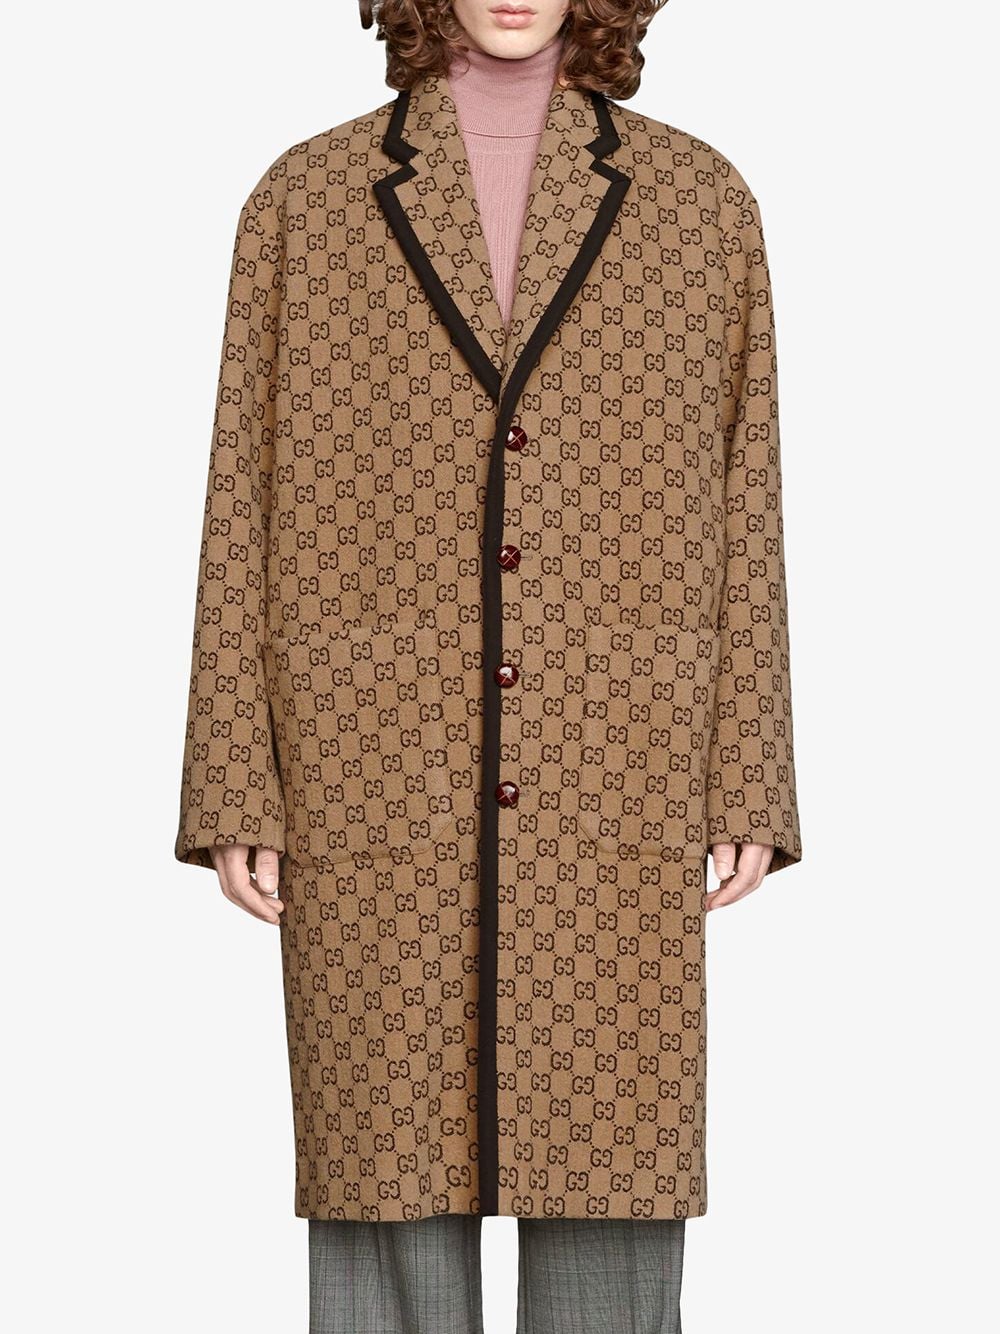 Selena Gomez Just Wore a Mango Coat With $1,480 Louis Vuitton